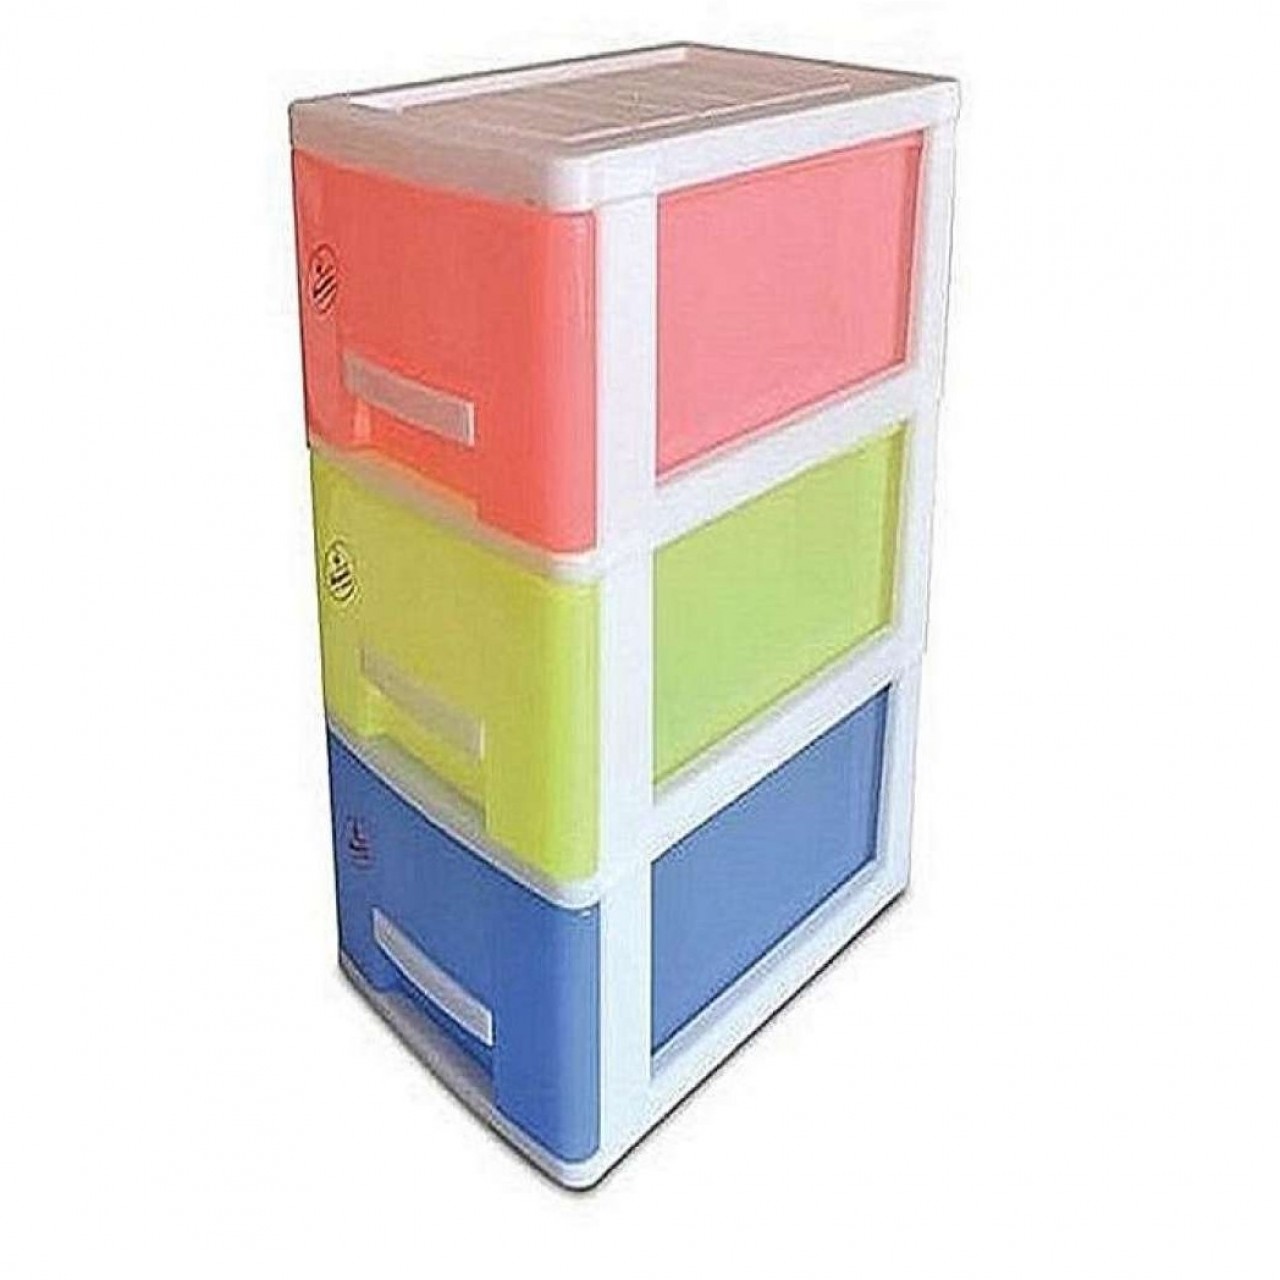 3 Drawer Storage Box - Multi color